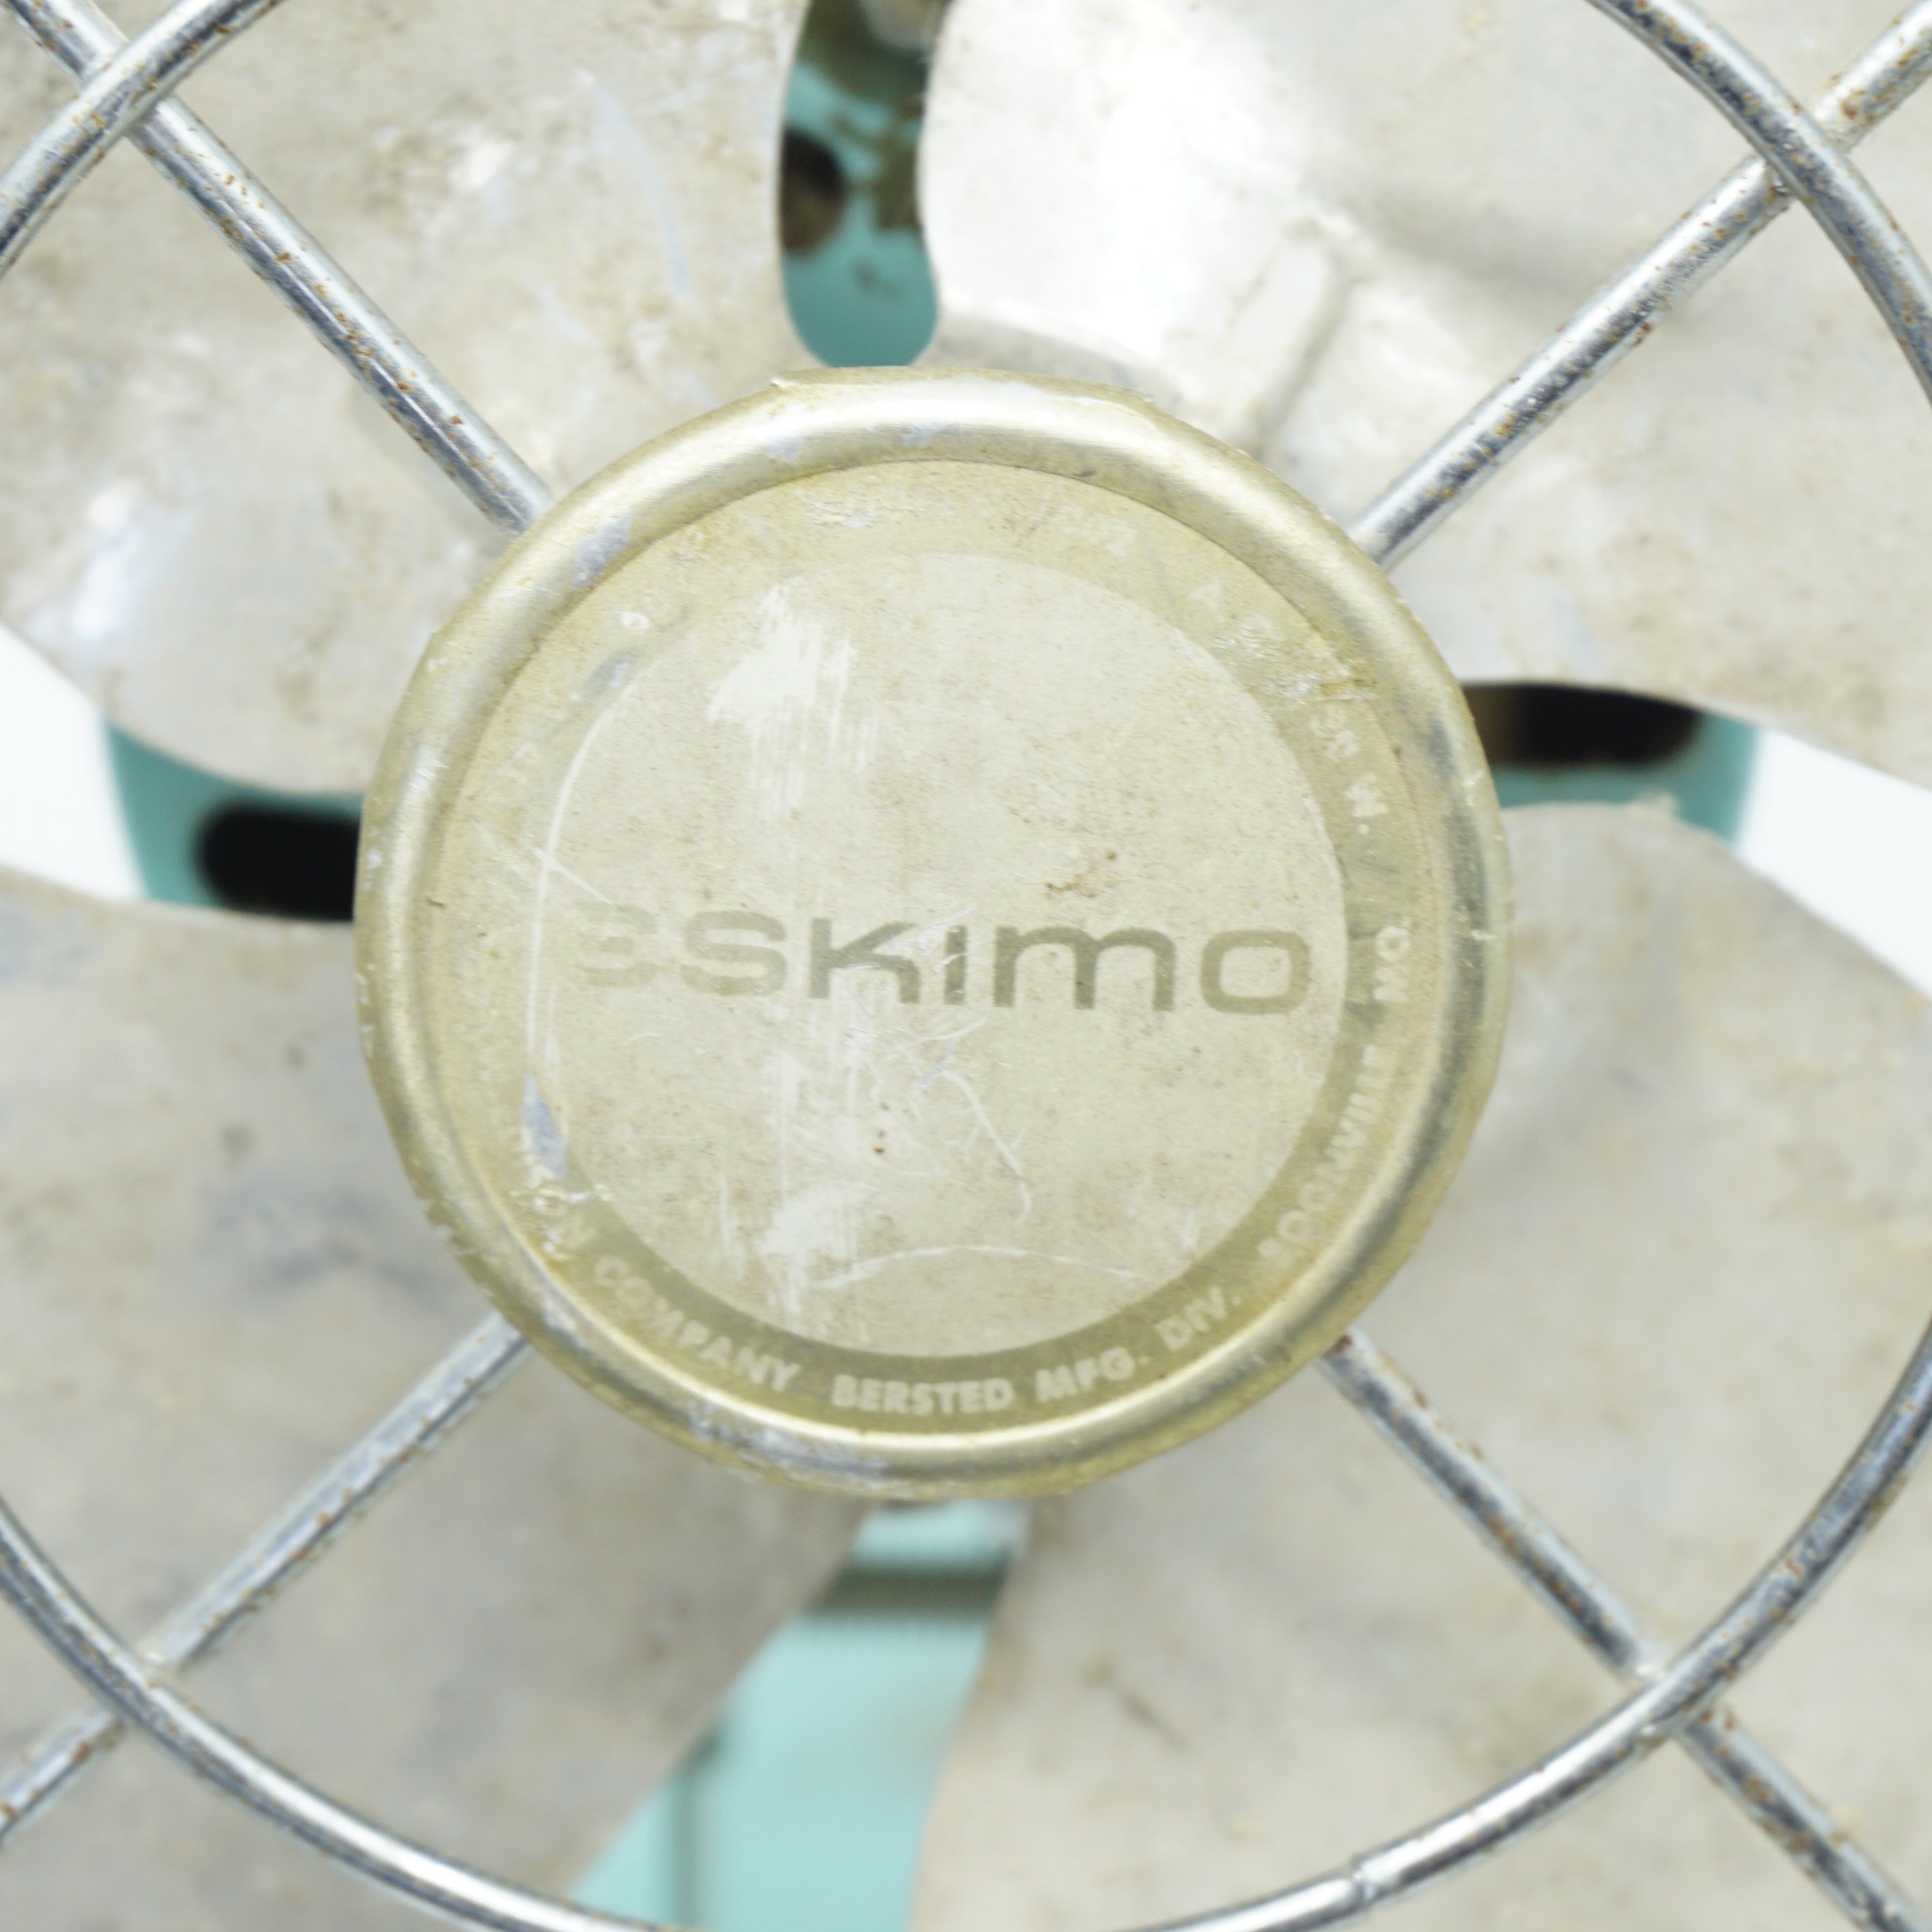 Art Deco Vintage Eskimo Open-Cage Desk/Wall Fan by McGraw Edison Co. in Turquoise